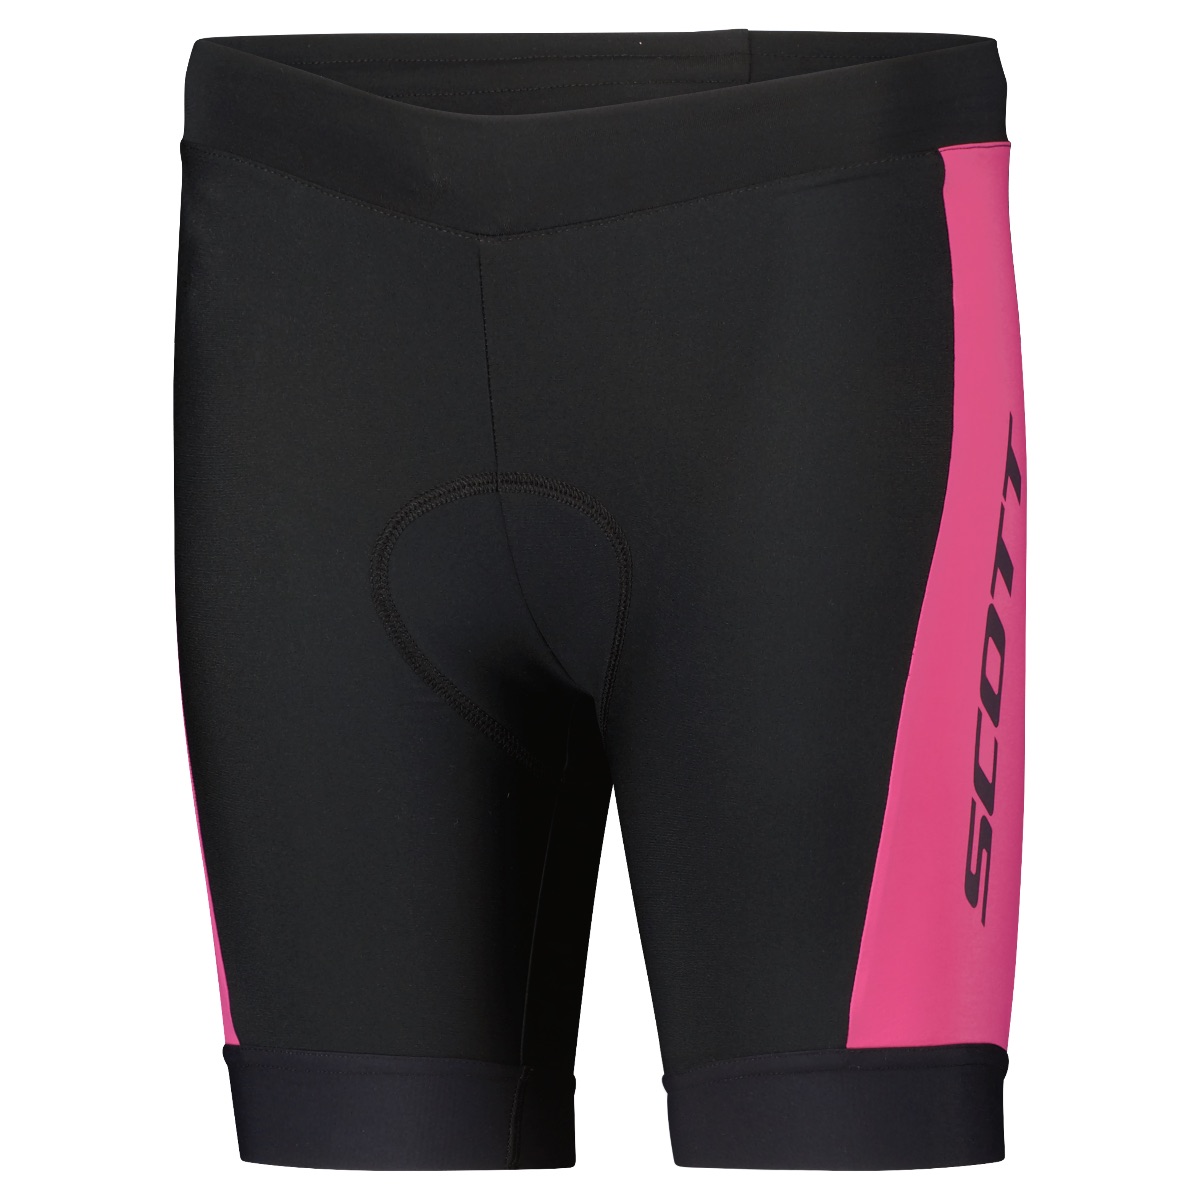 Kids black and pink bike shorts